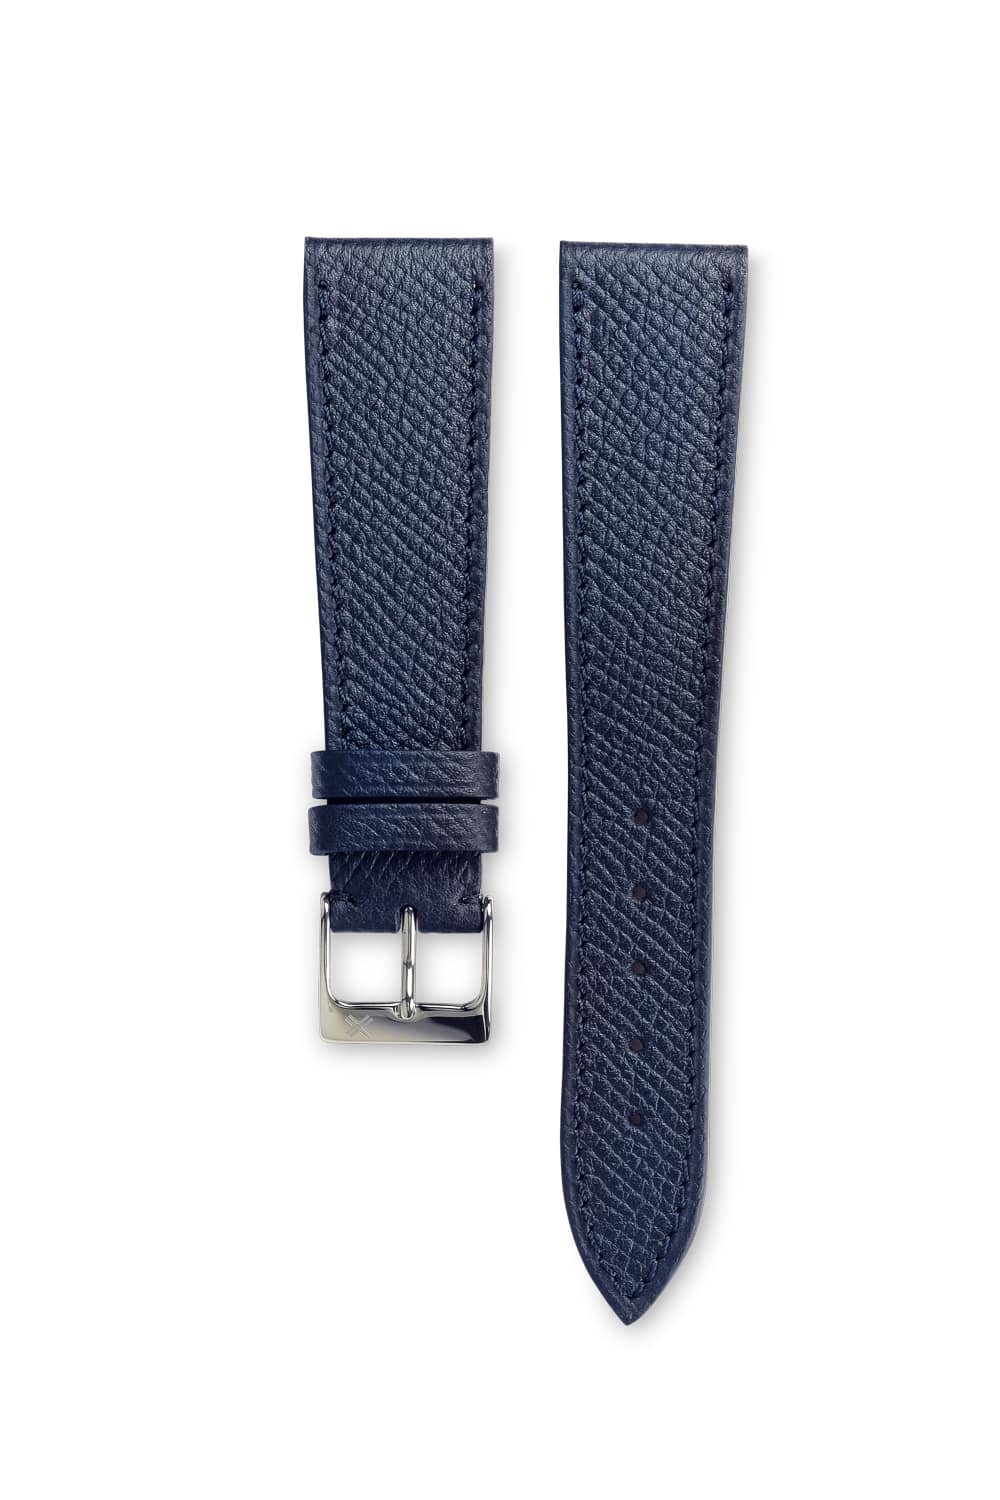 Navy Blue Leather Wrist Strap